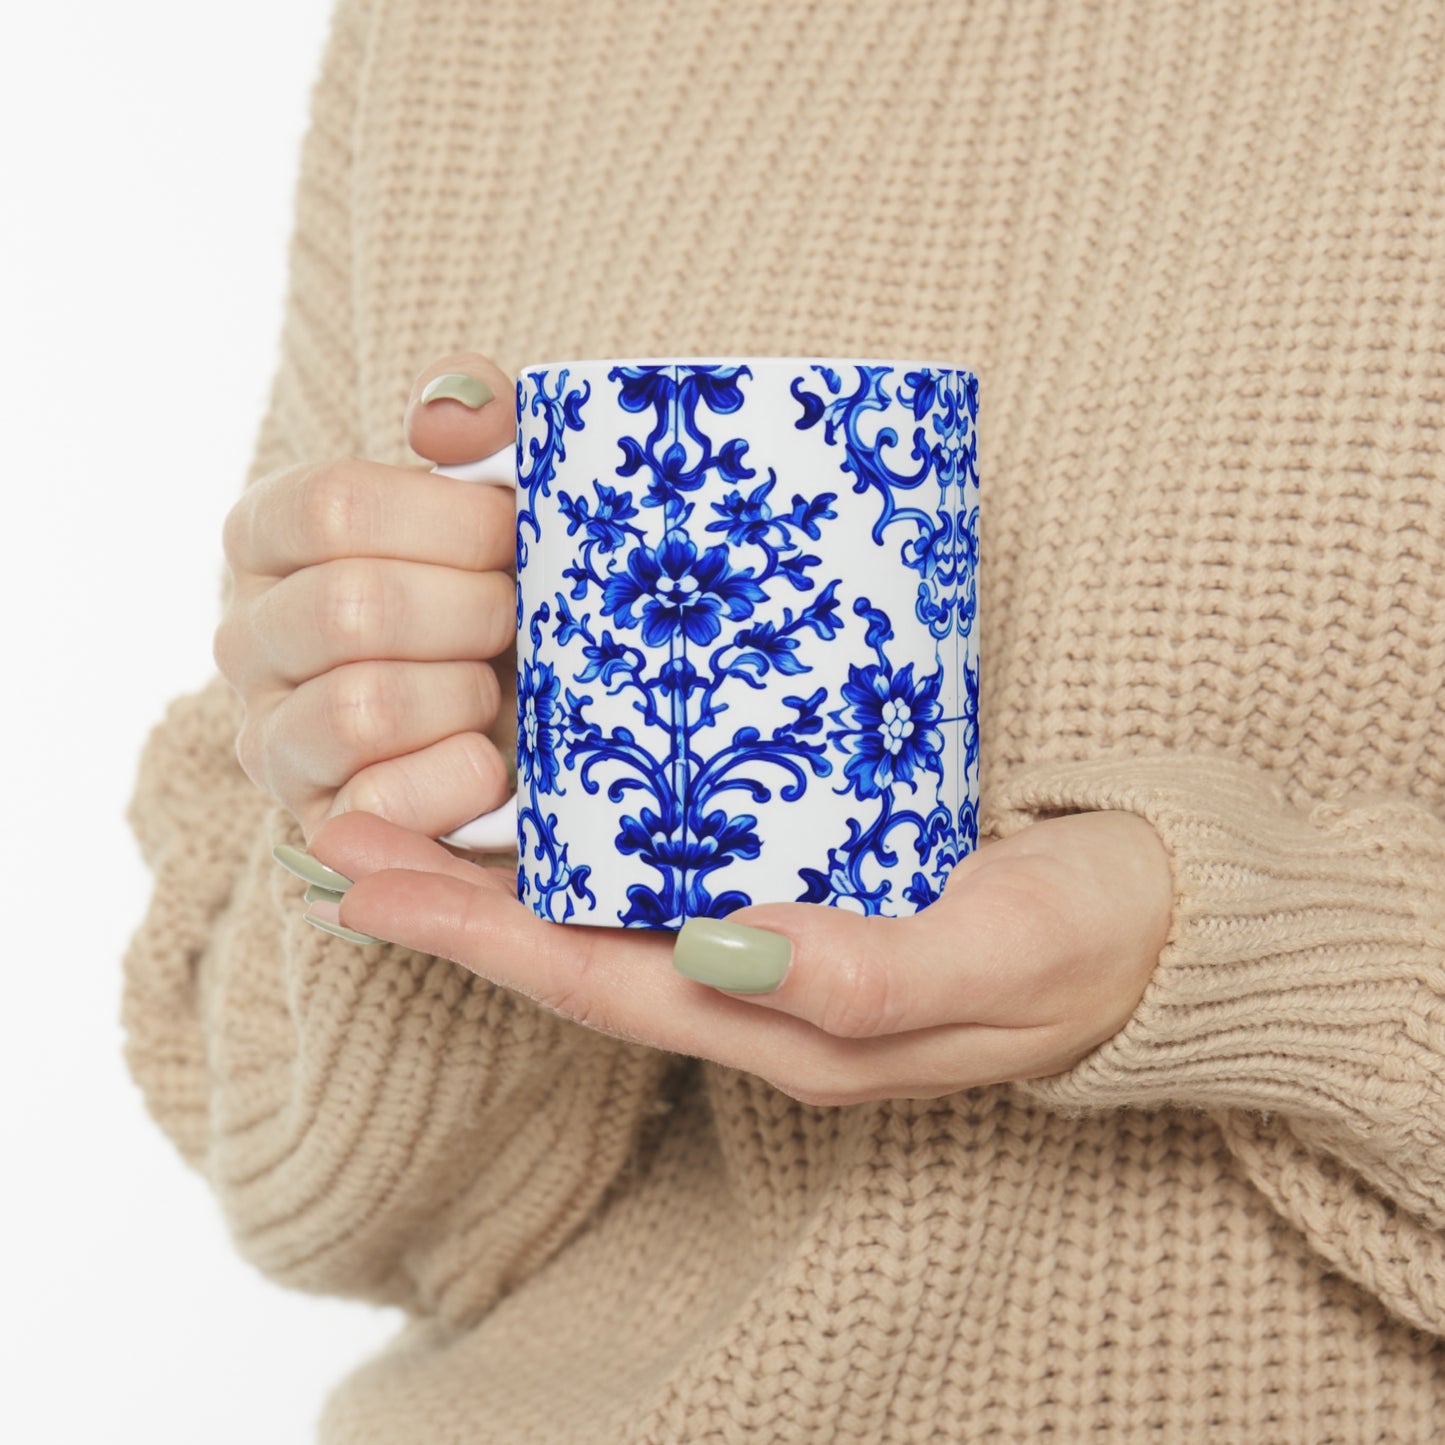 Portuguese Blue and White Tile Pattern Hot Beverage Coffee Tea Ceramic Mug 11oz